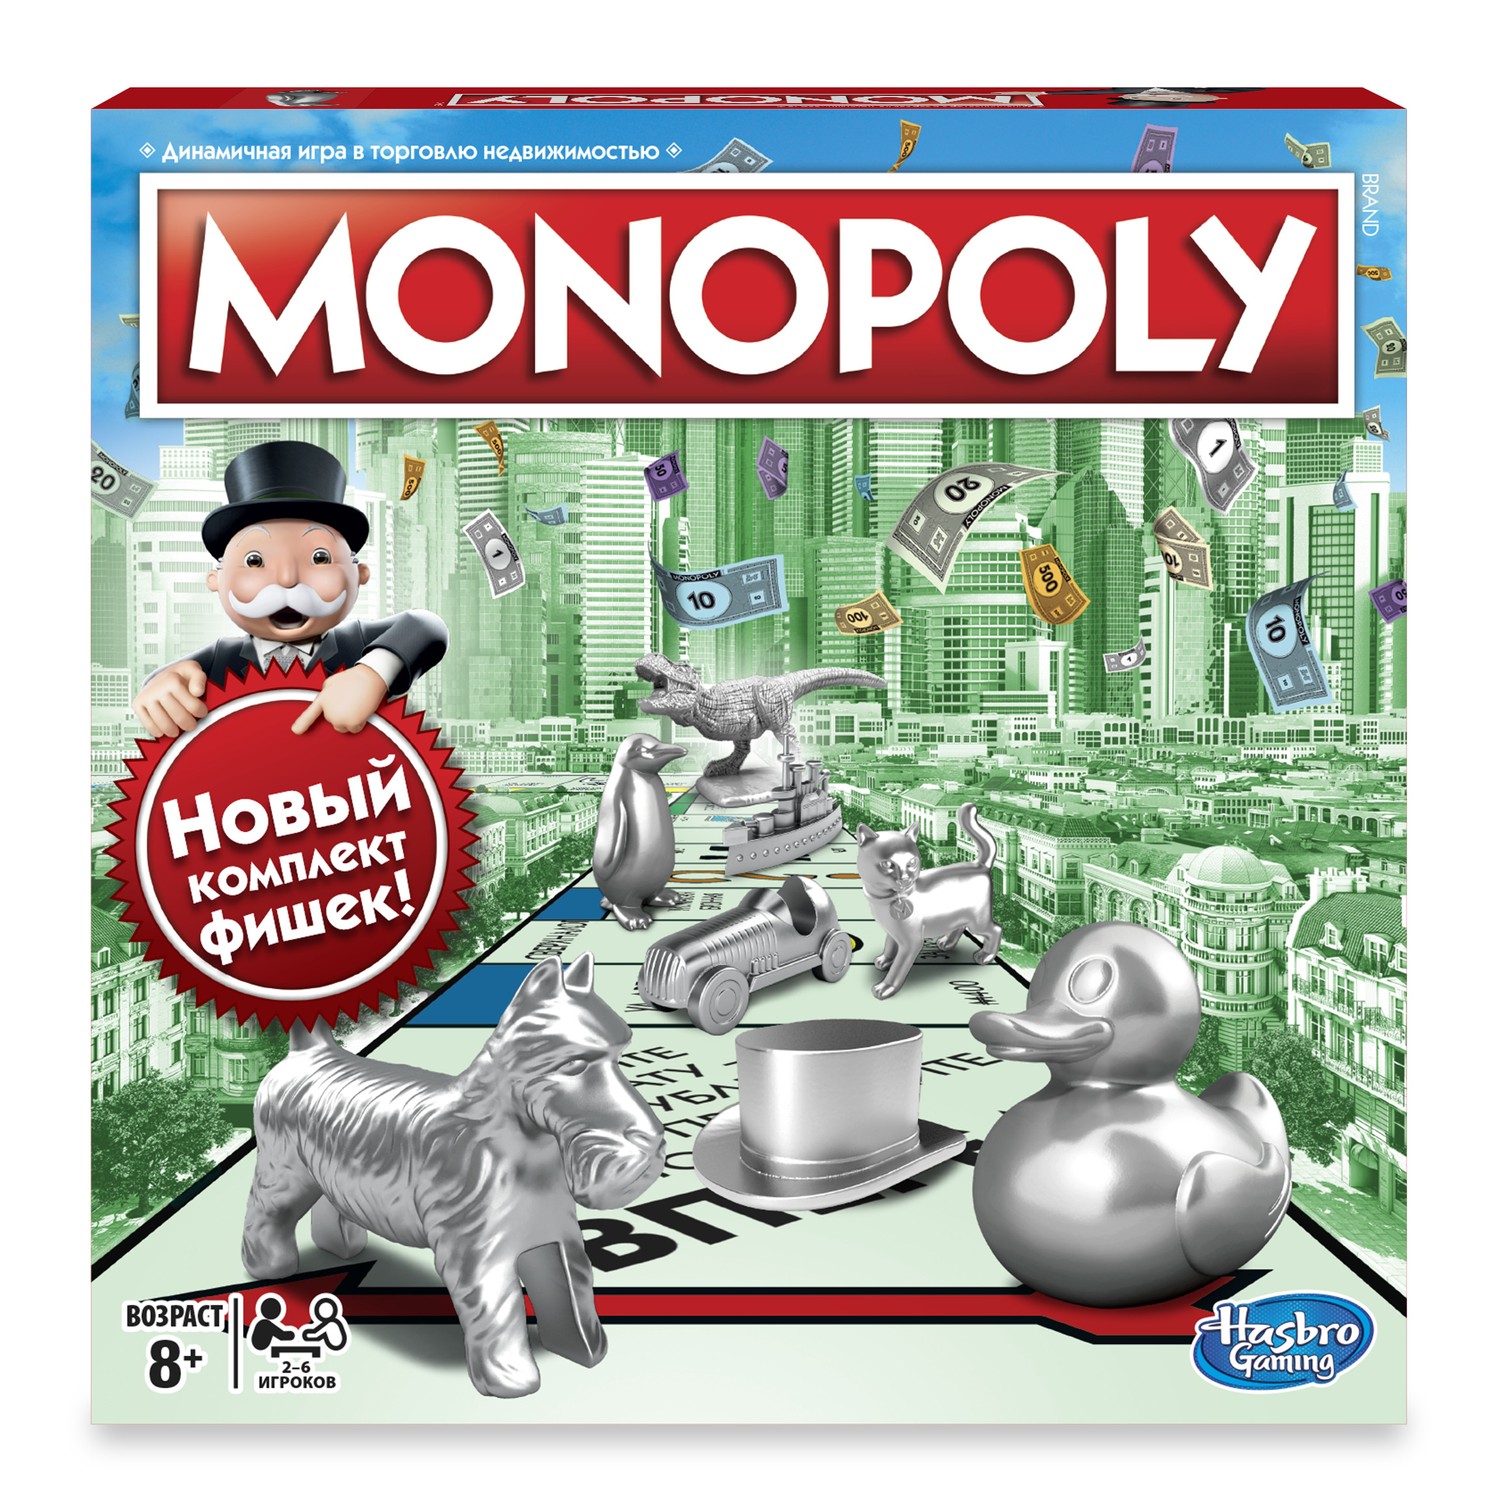 Игра монополия hasbro. Монополия классика Monopoly c1009. Игры Хасбро Монополия. Настольная игра "Монополия классическая" c1009 /Hasbro/. Настольная игра Monopoly классическая обновленная c1009.